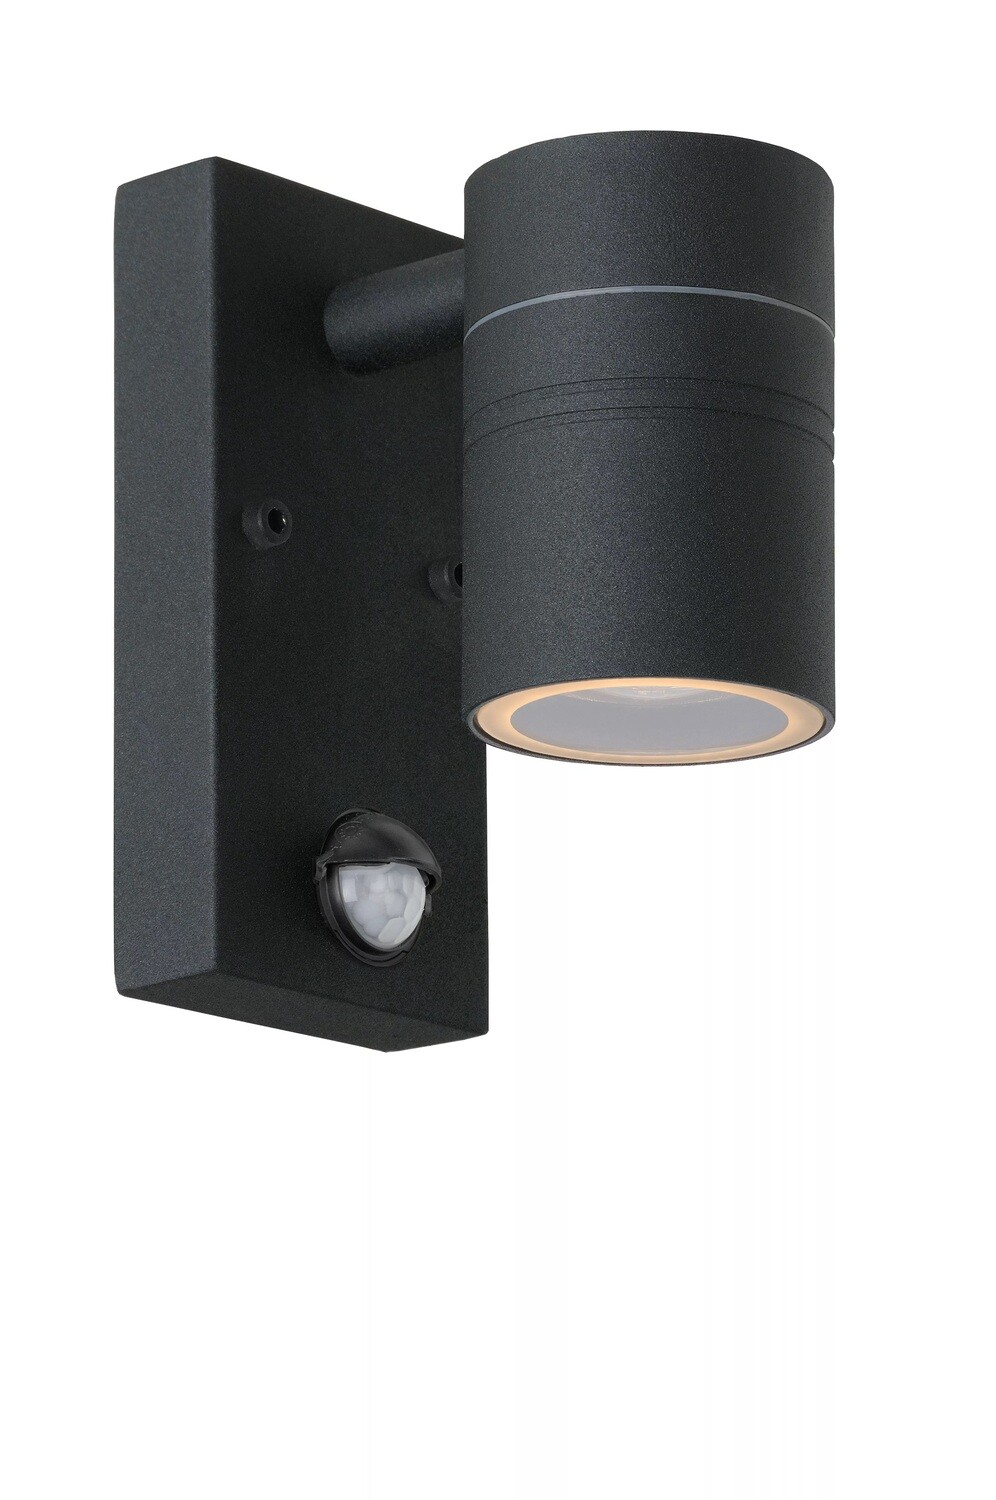 ARNE Wall light Outdoor 1xGU10 IP44 Black with motion sensor